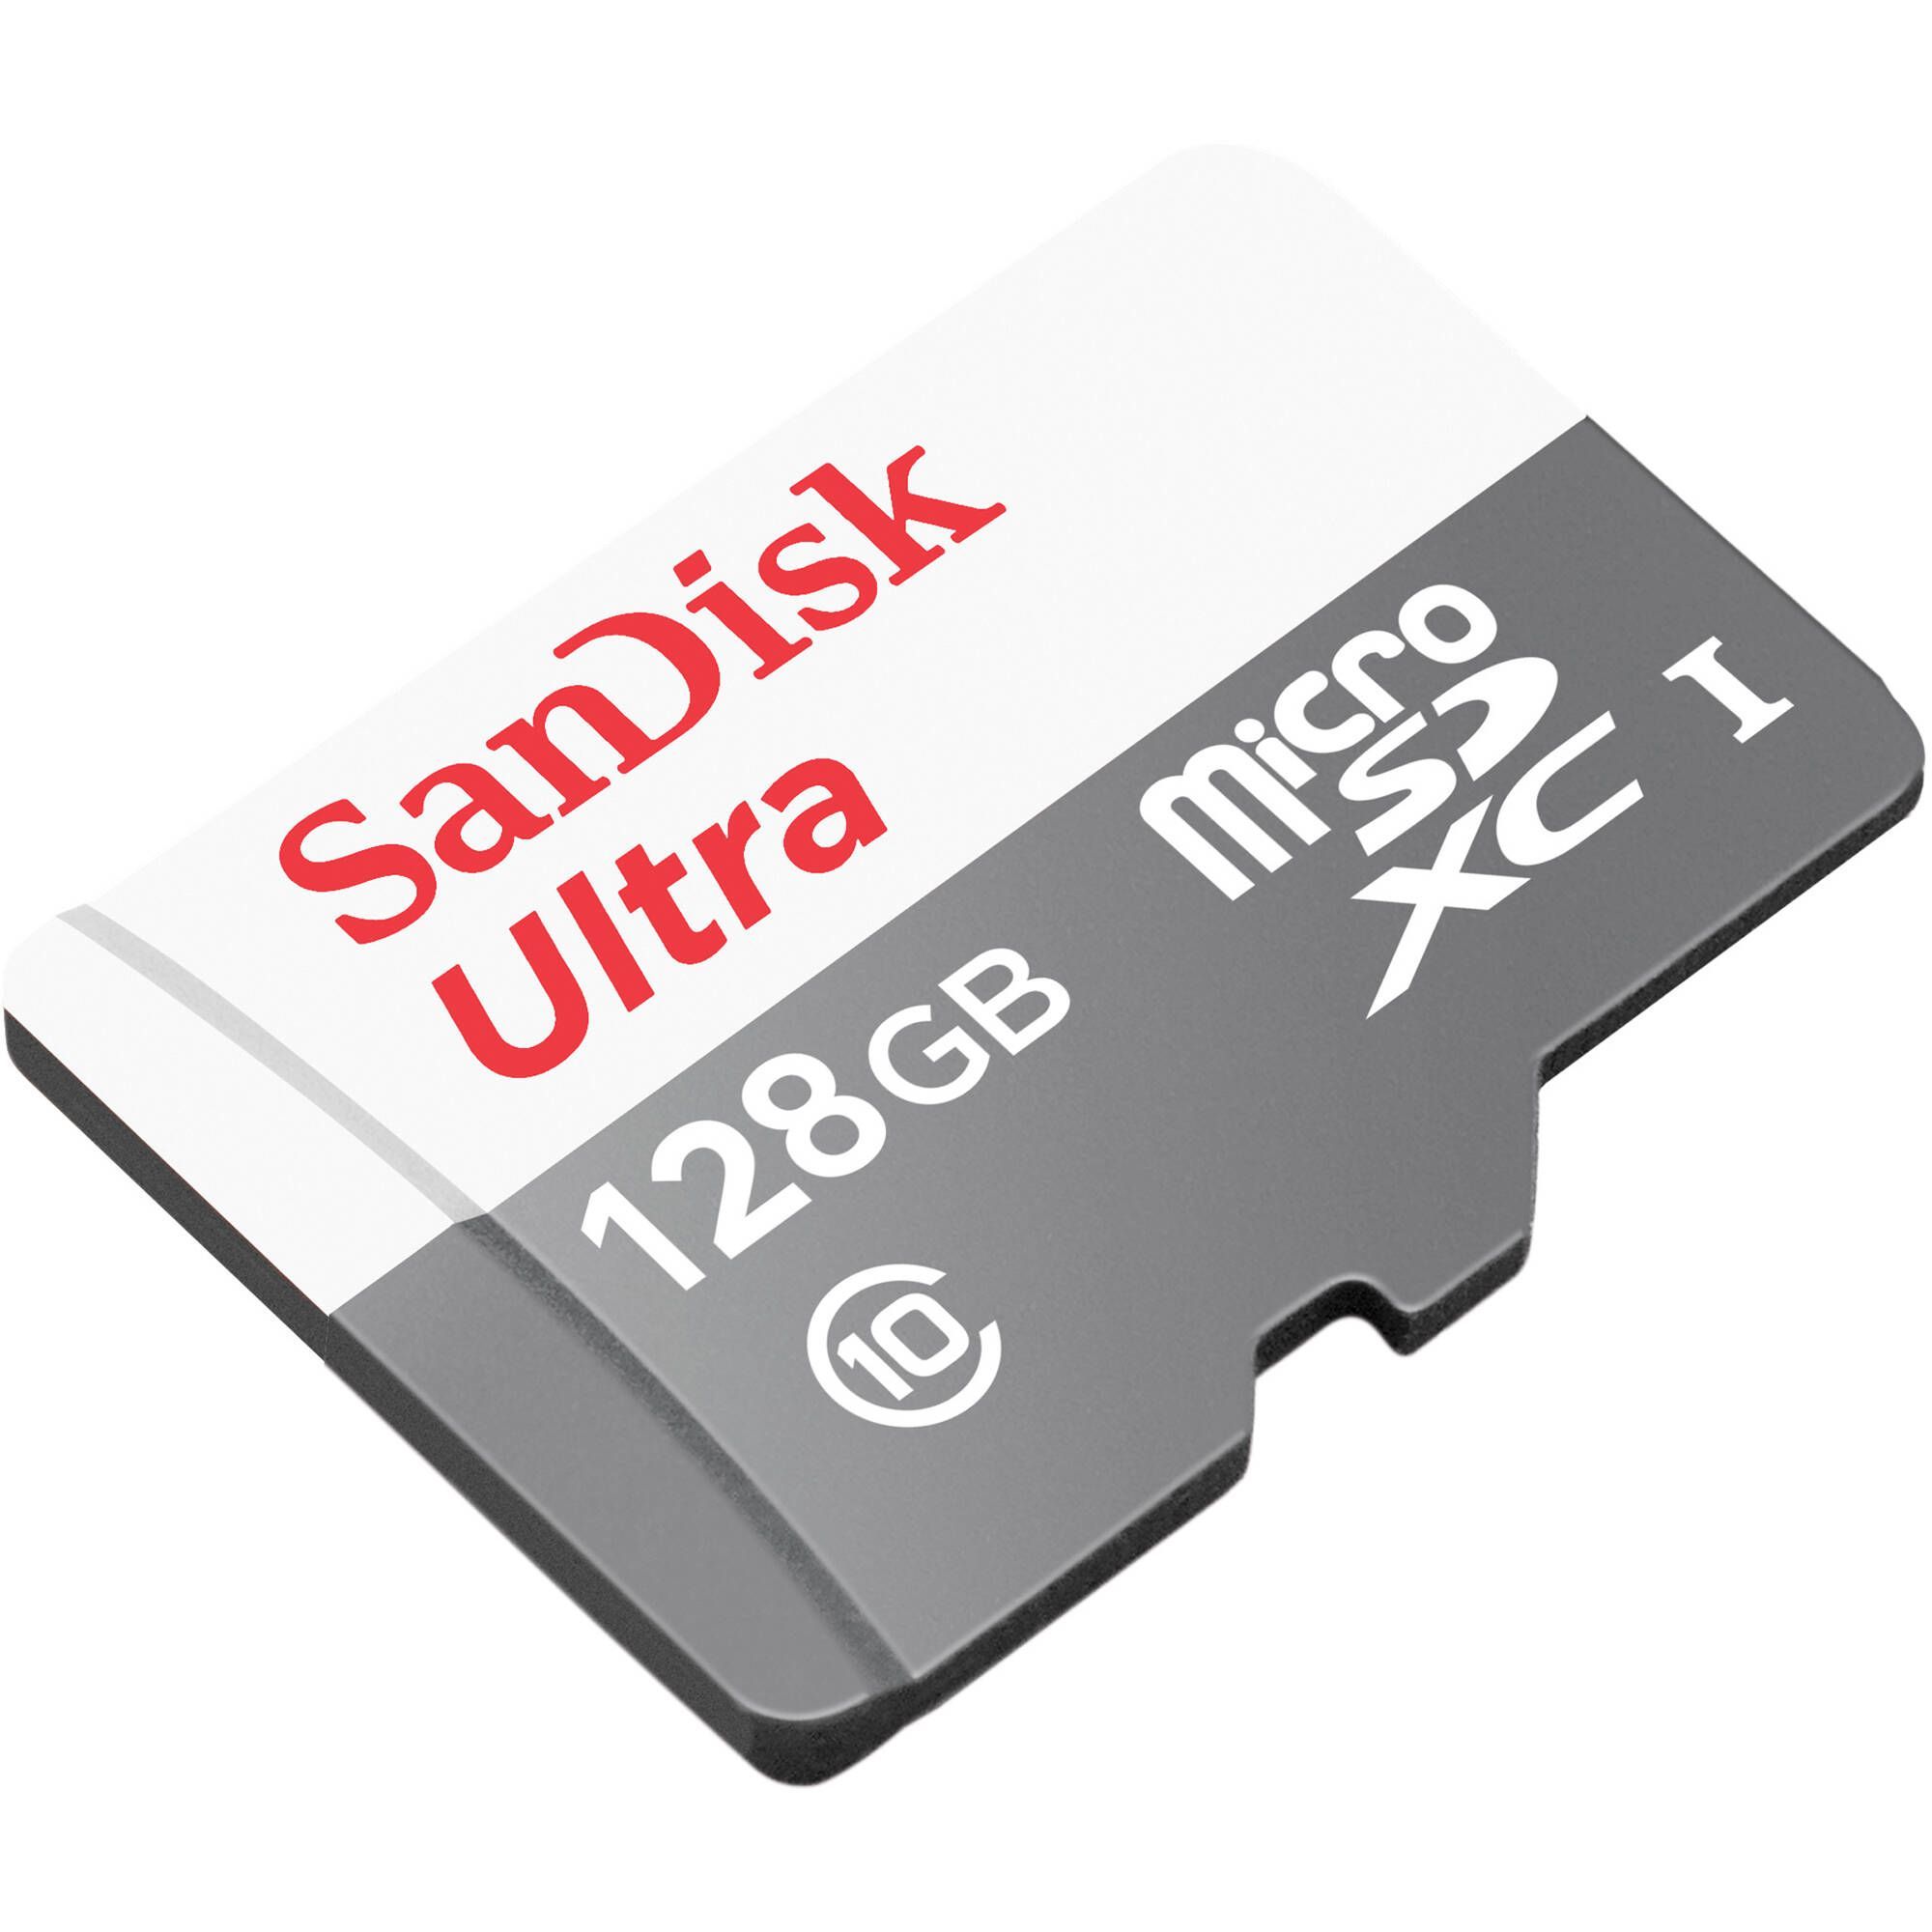 Microsdhc 16gb. SANDISK Ultra 64 GB. Memory Micro SDHC 16gb UHS-I SDSQUNS-016g-gn3mn SANDISK. SANDISK 64 GB SD. Карта памяти MICROSDHC SANDISK Ultra 16gb class 10 UHS-I (80/10 MB/S).